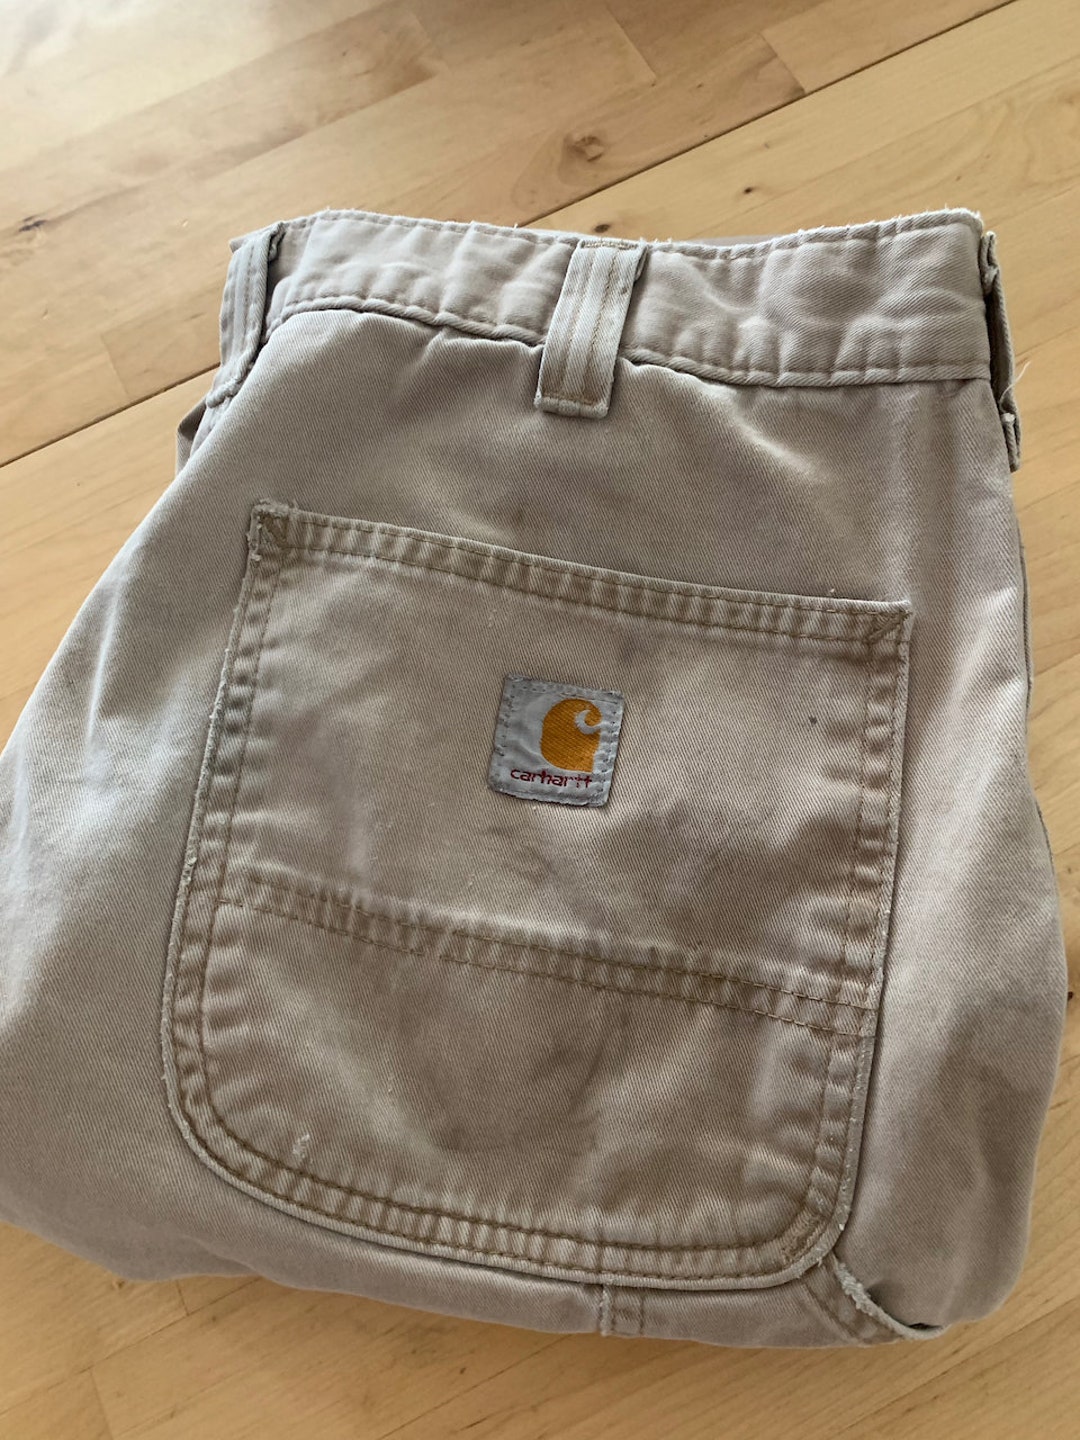 SALE Carhart Carpenter Trousers Work Pants Khaki Trashed Vintage ...